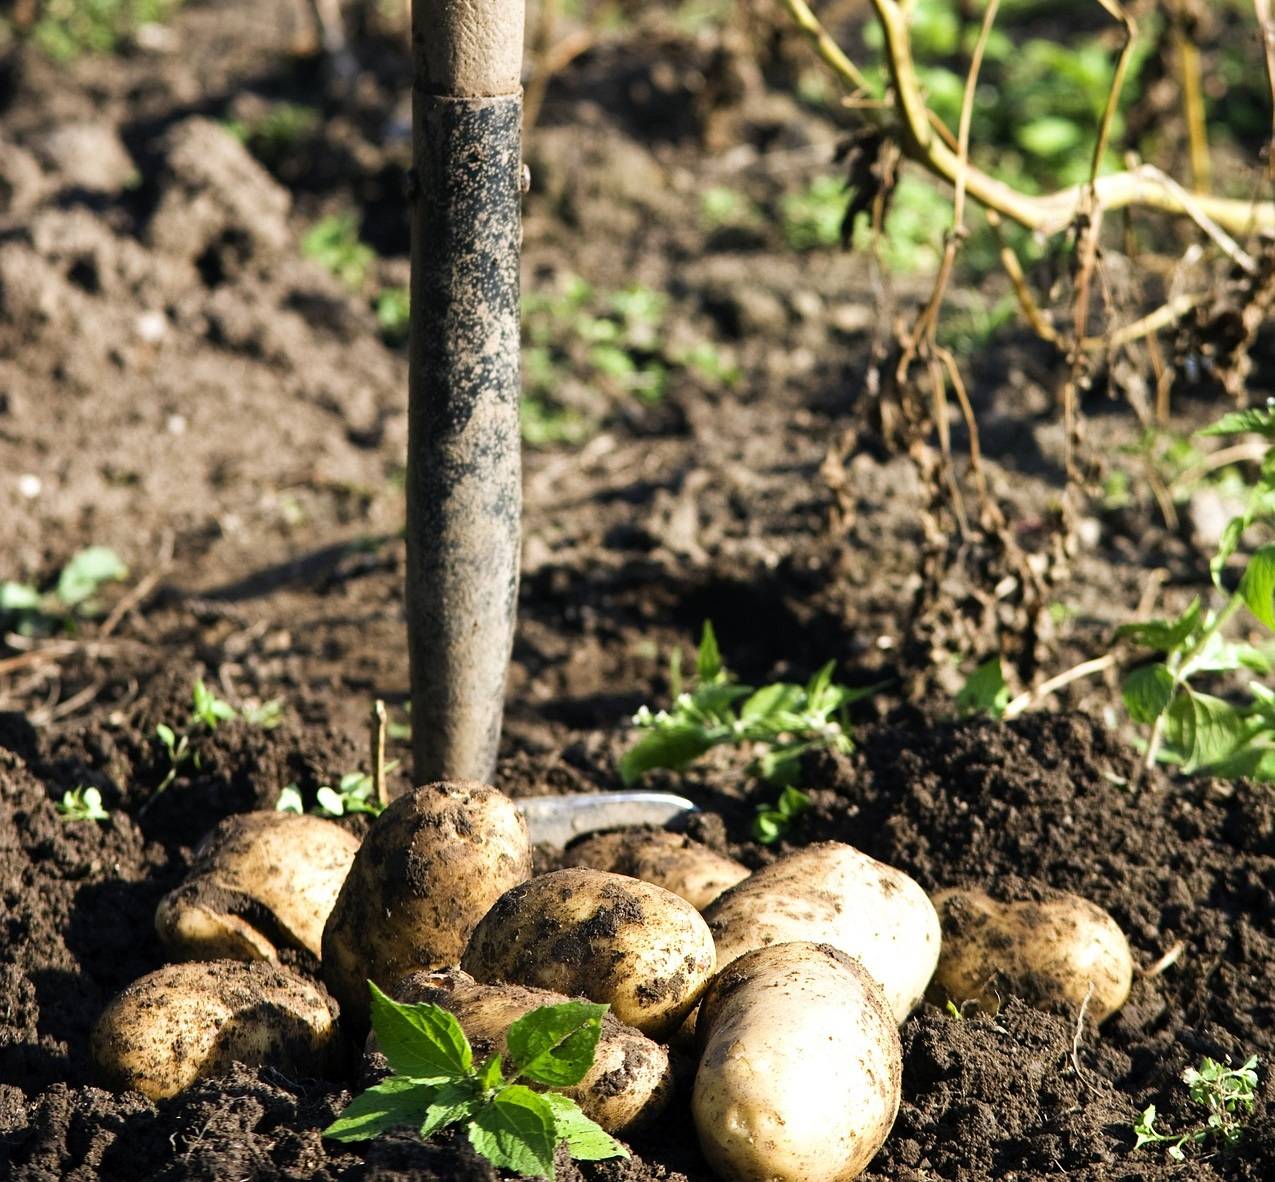 ᐉ когда копать молодую картошку на еду – признаки готовности - roza-zanoza.ru